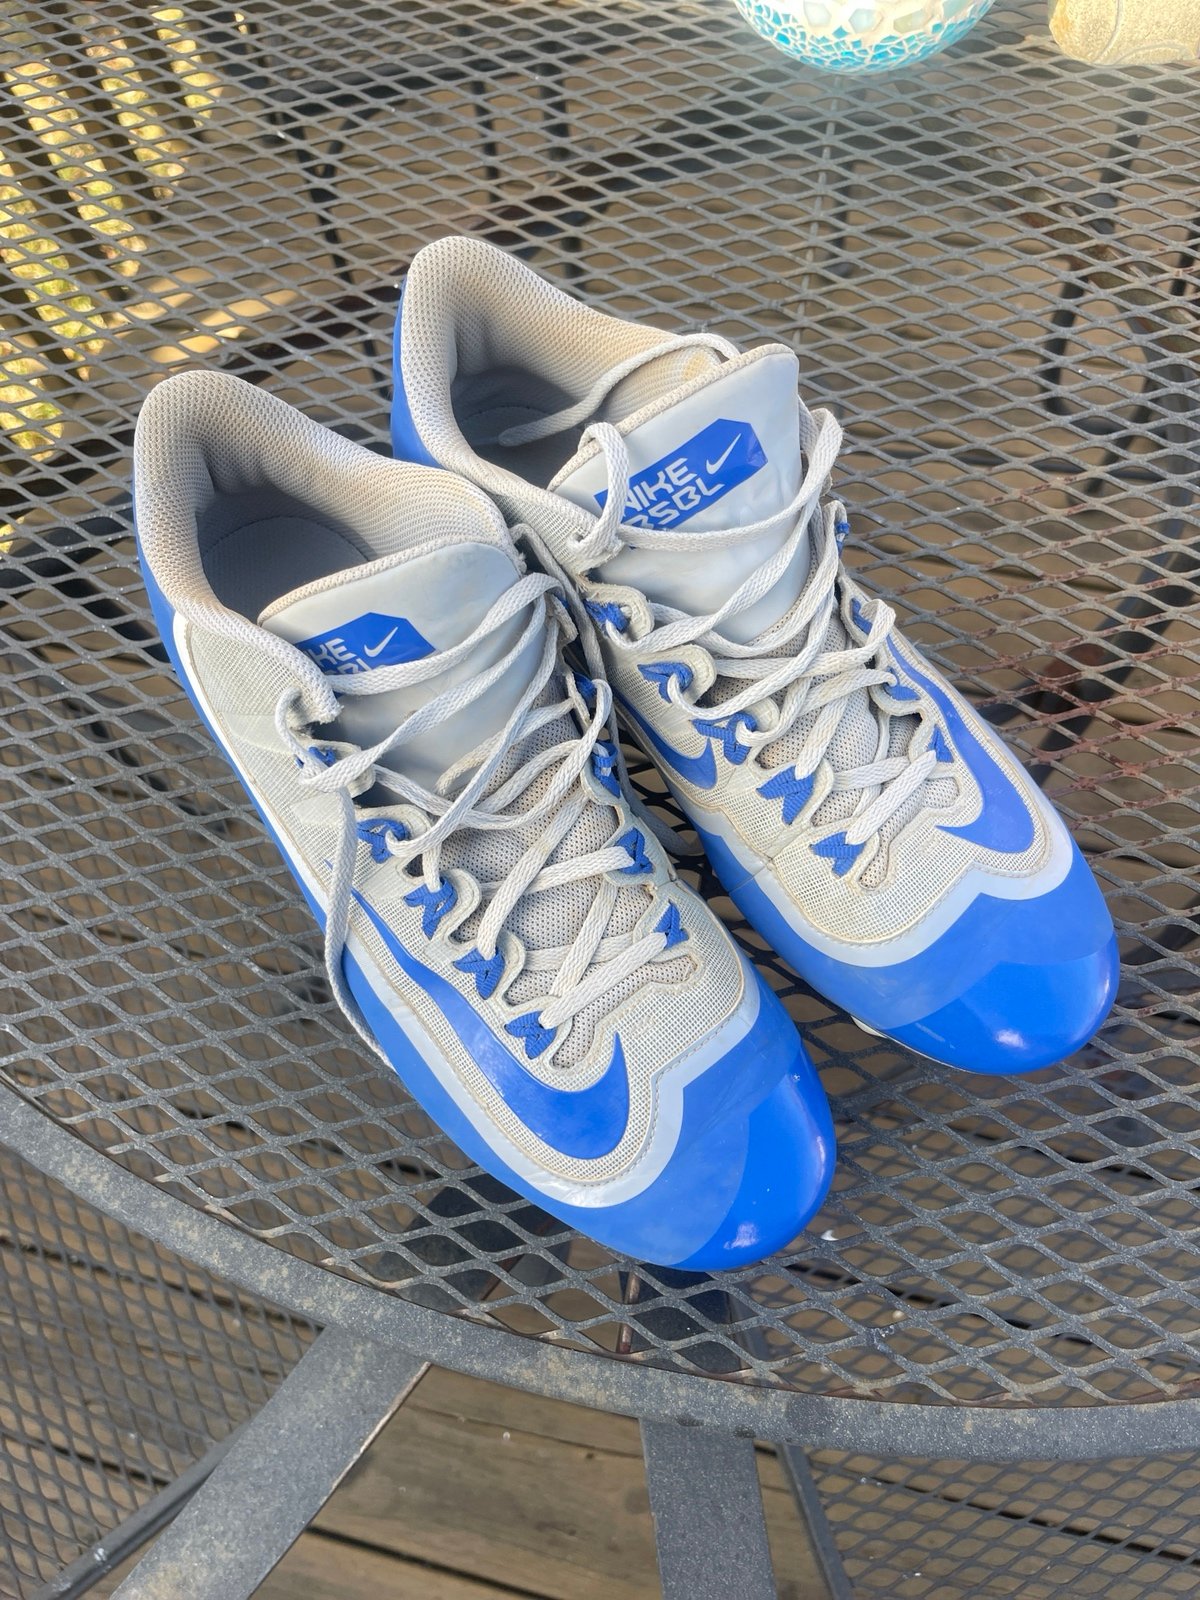 Men’s Nike Air Huarache 2K Filth Elite Low Blue Metal Baseball Cleats Size 12 MaiYtIYlN